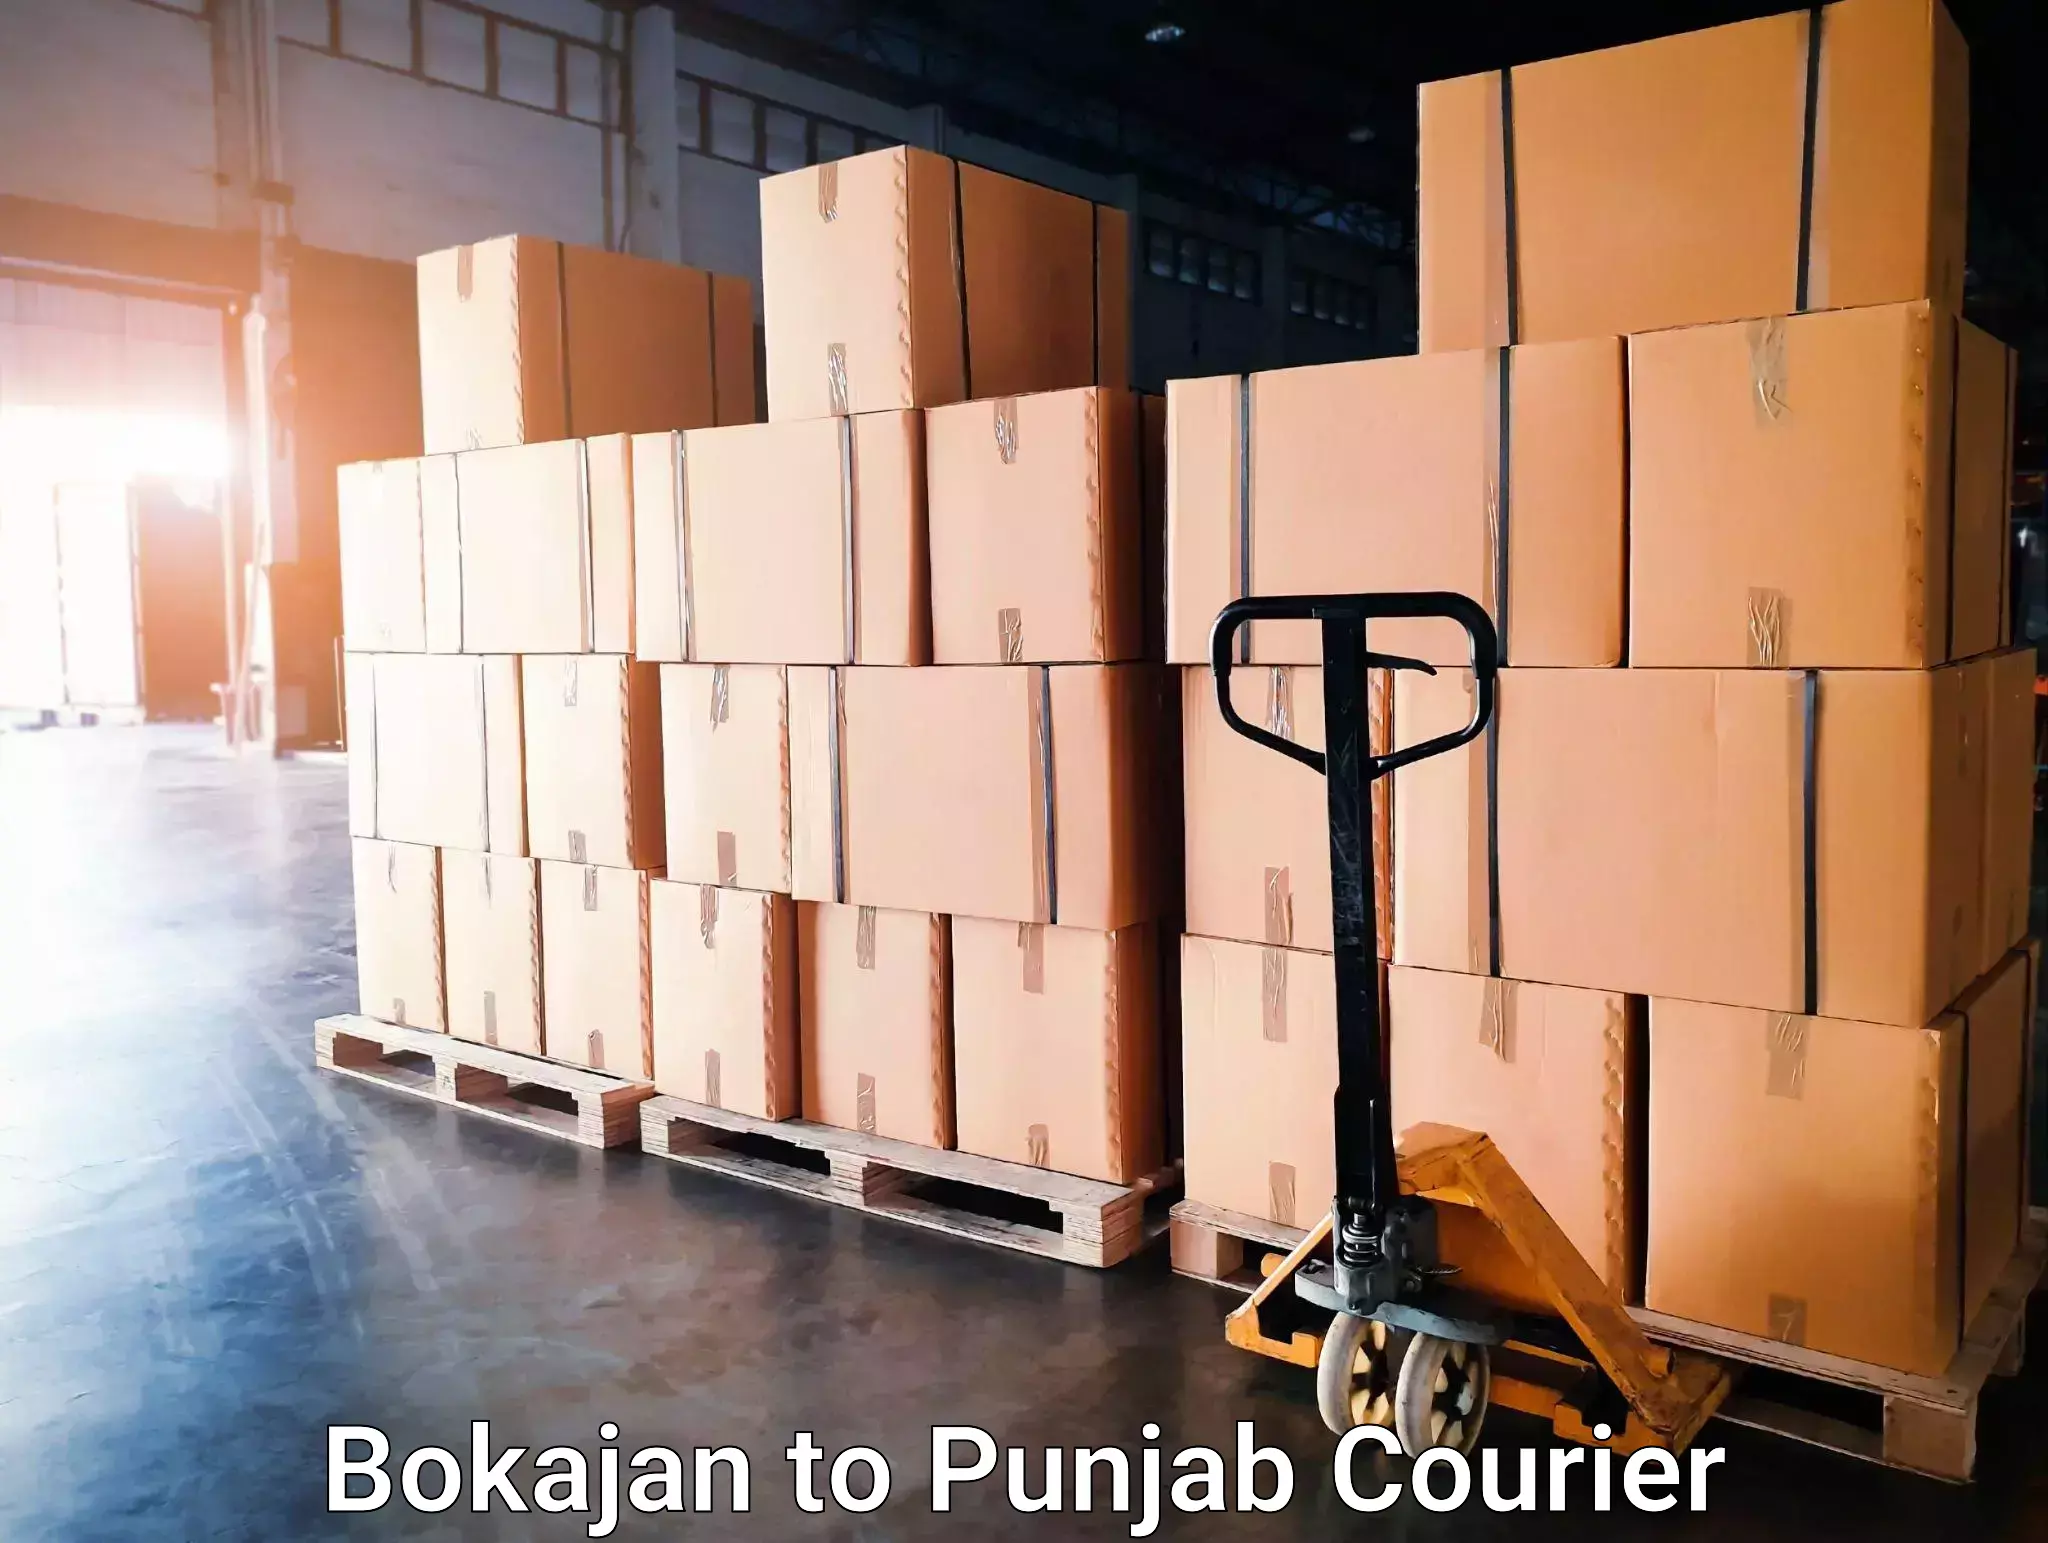 Courier service comparison Bokajan to Barnala